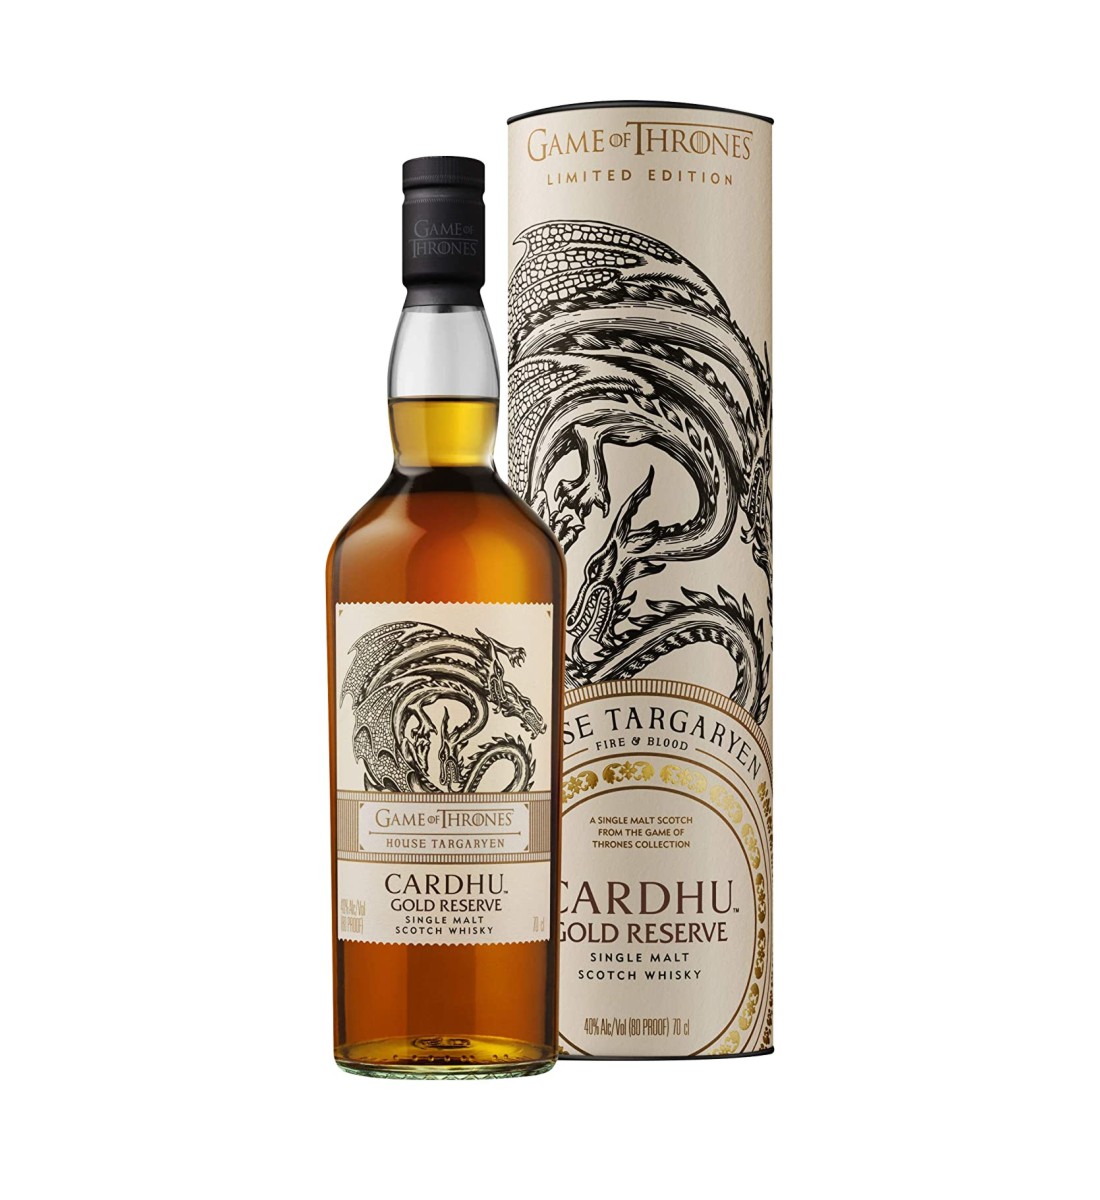 Cardhu Gold Reserve House Targaryen Whisky 0.7L